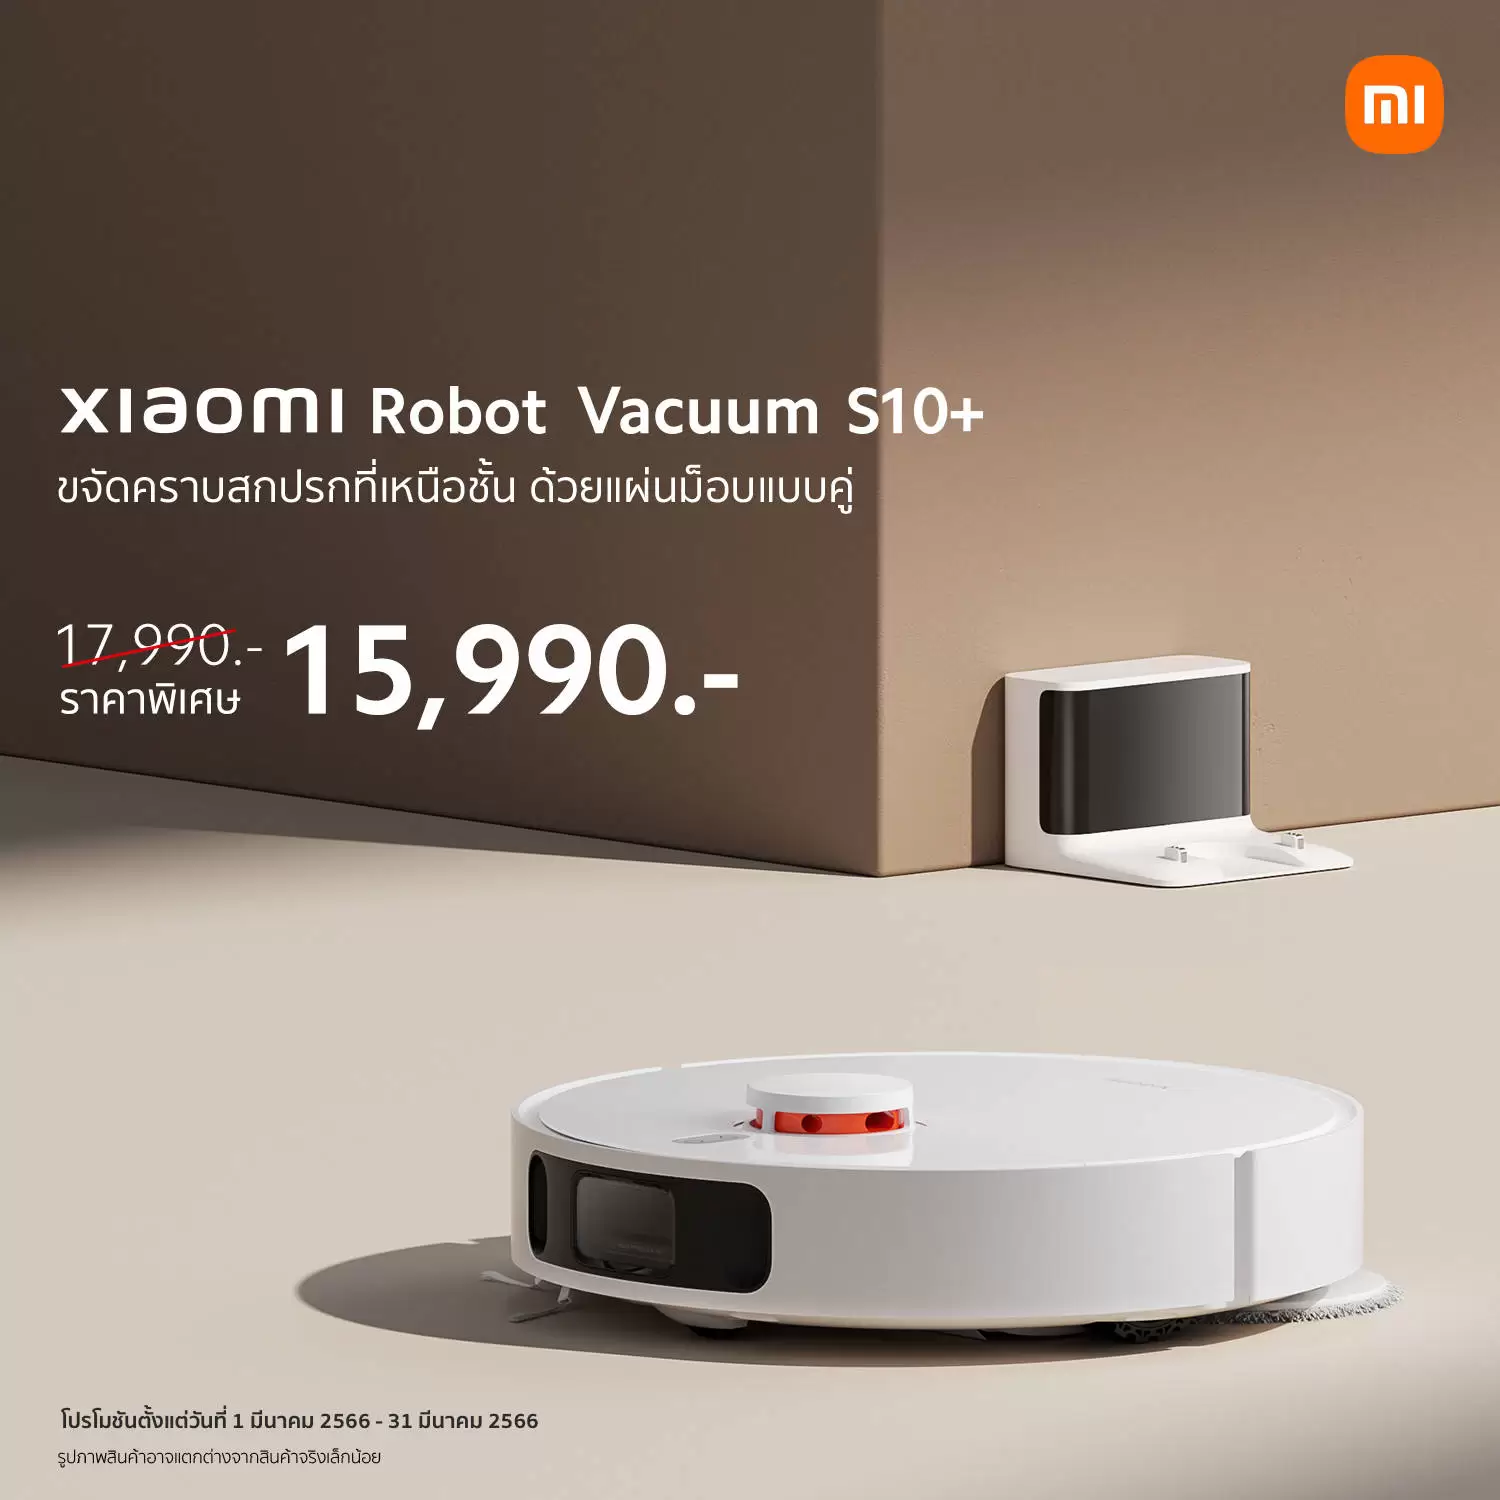 Xiaomi Robot Vacuum S10 KV | Xiaomi | รวมข้อมูล AIoT รุ่นใหม่ของ Xiaomi นาฬิกา, หูฟัง และ หุ่นยนต์ดูดฝุ่น ราคาและโปรโมชั่น